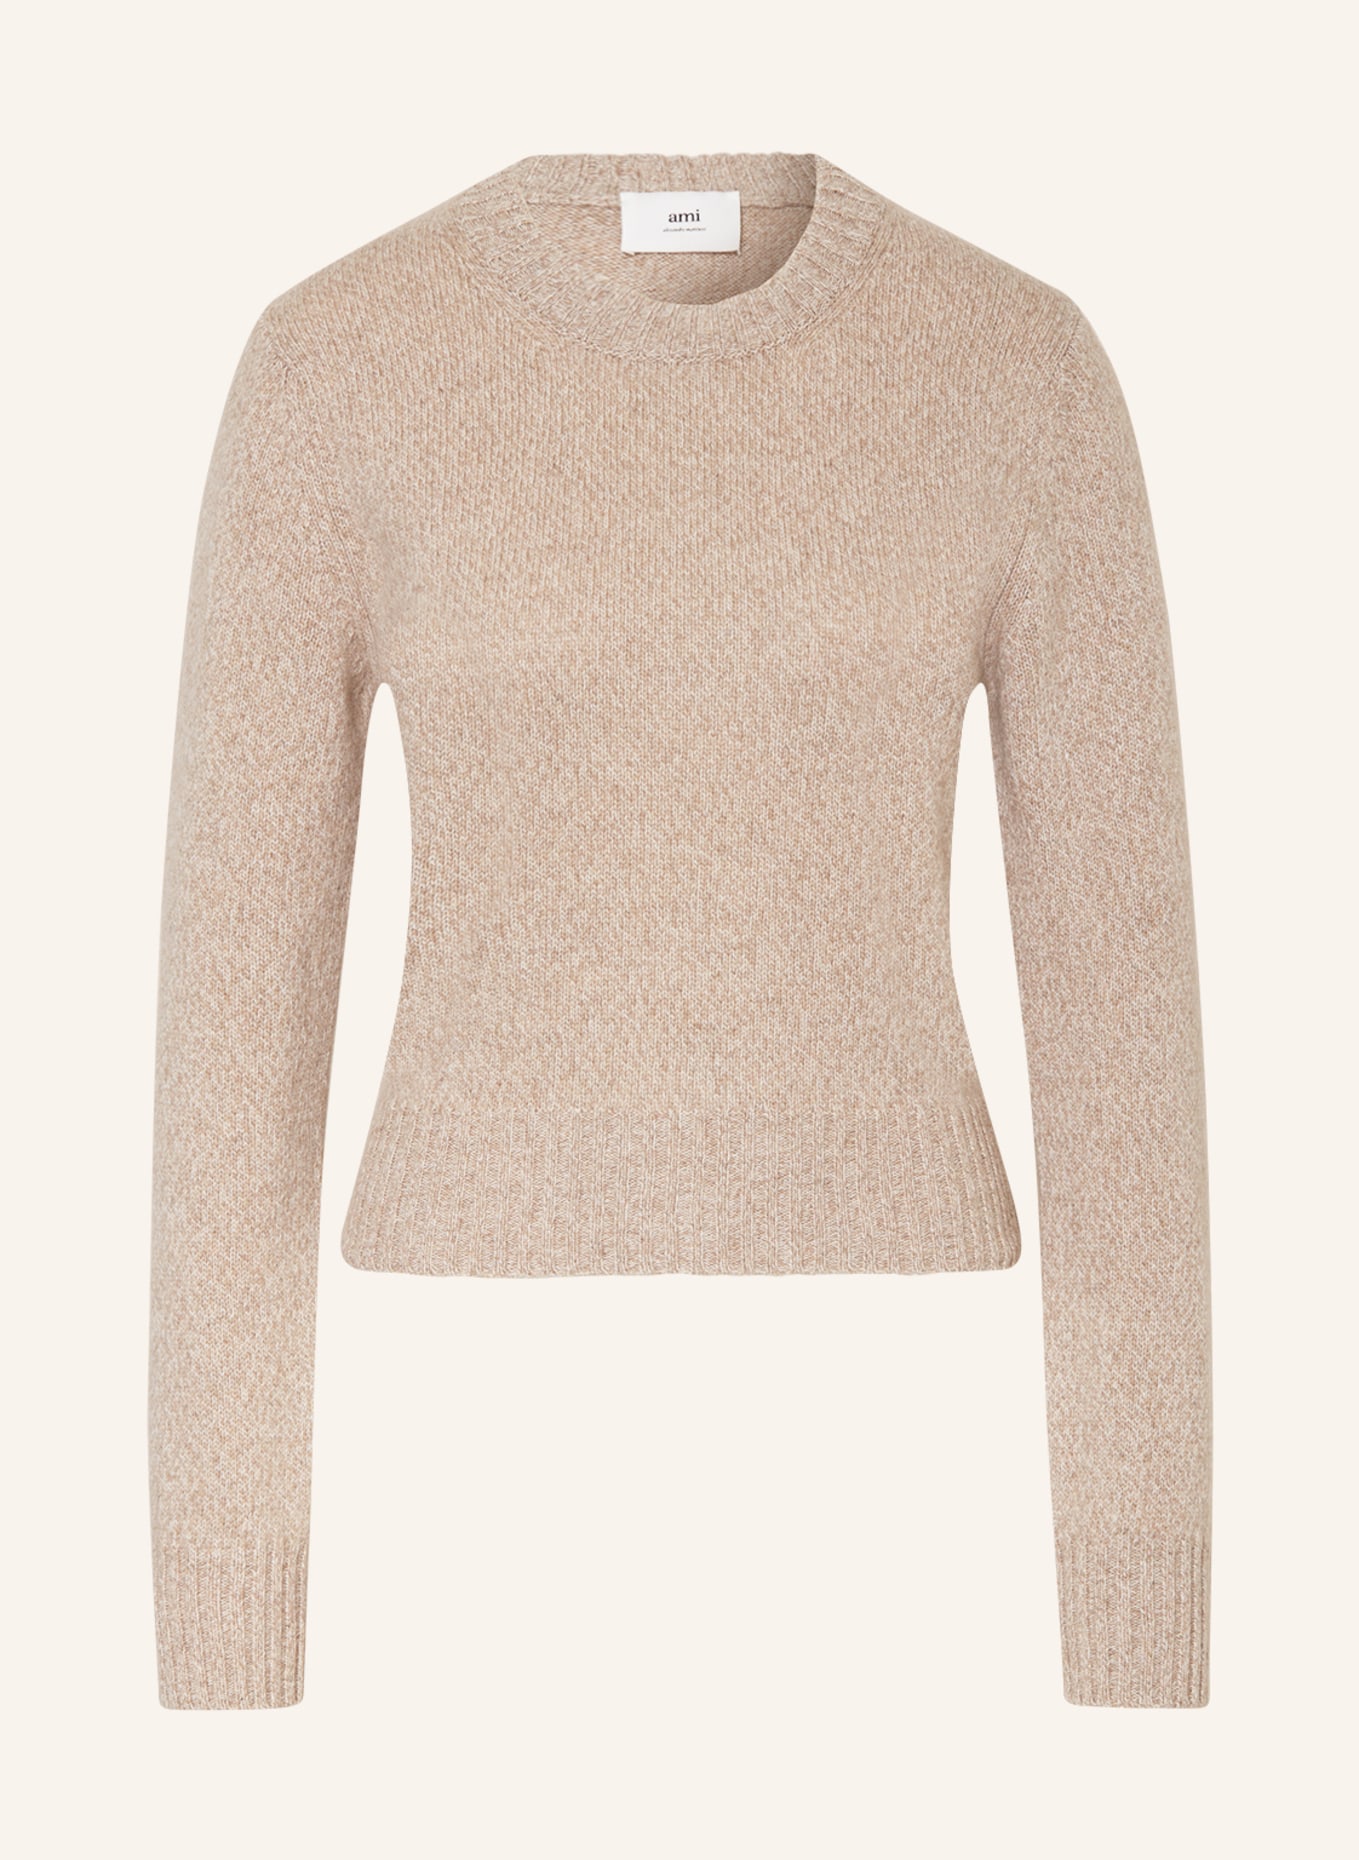 AMI PARIS Cashmere-Pullover, Farbe: BEIGE (Bild 1)